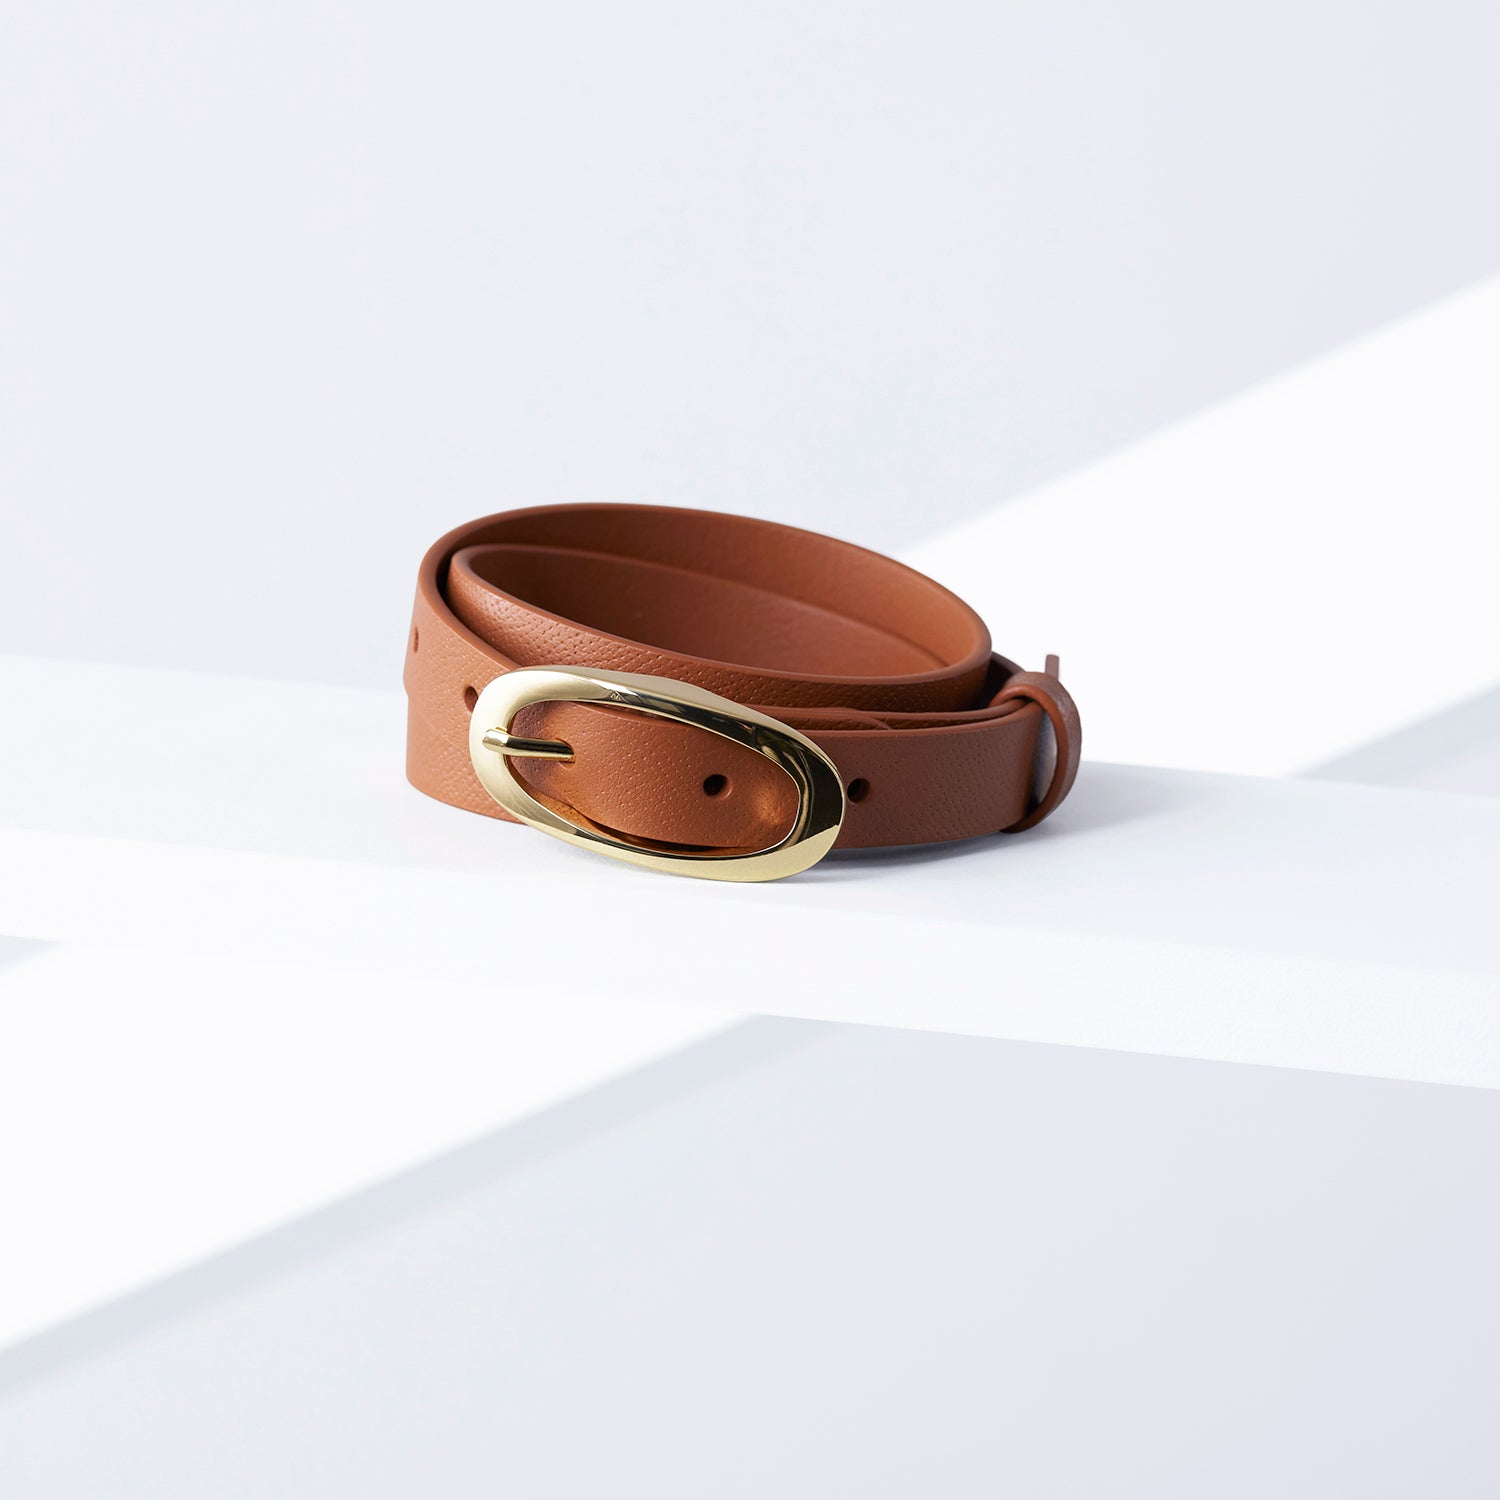 Aura Leather Belt 19mm| gold tan saffiano